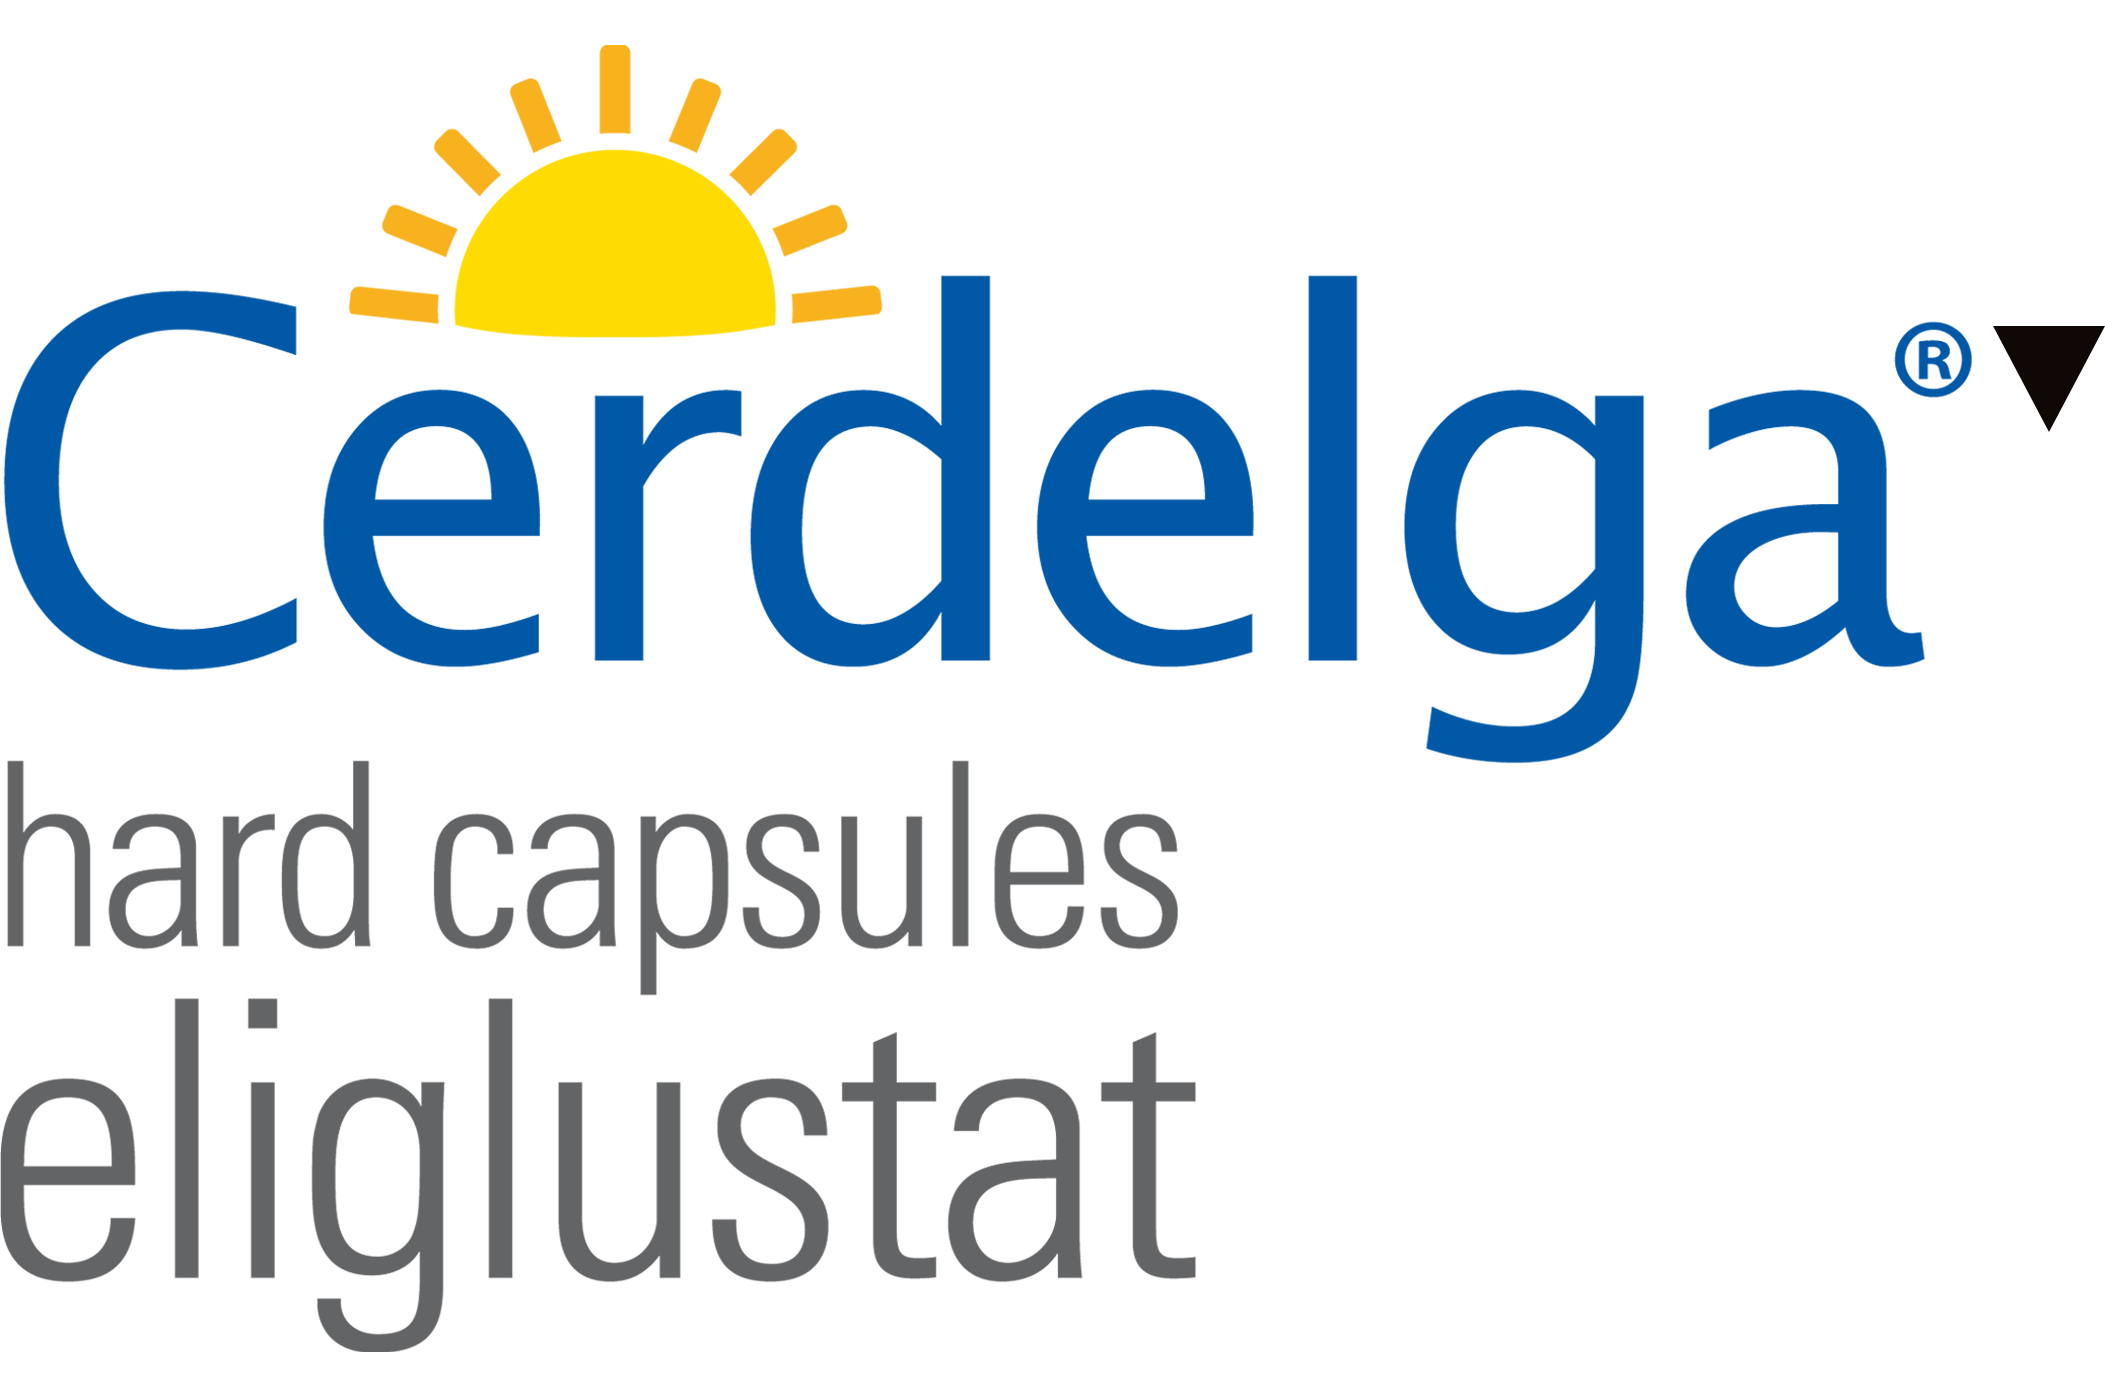 Cerdelga®▼ (hard capsules eliglustat)